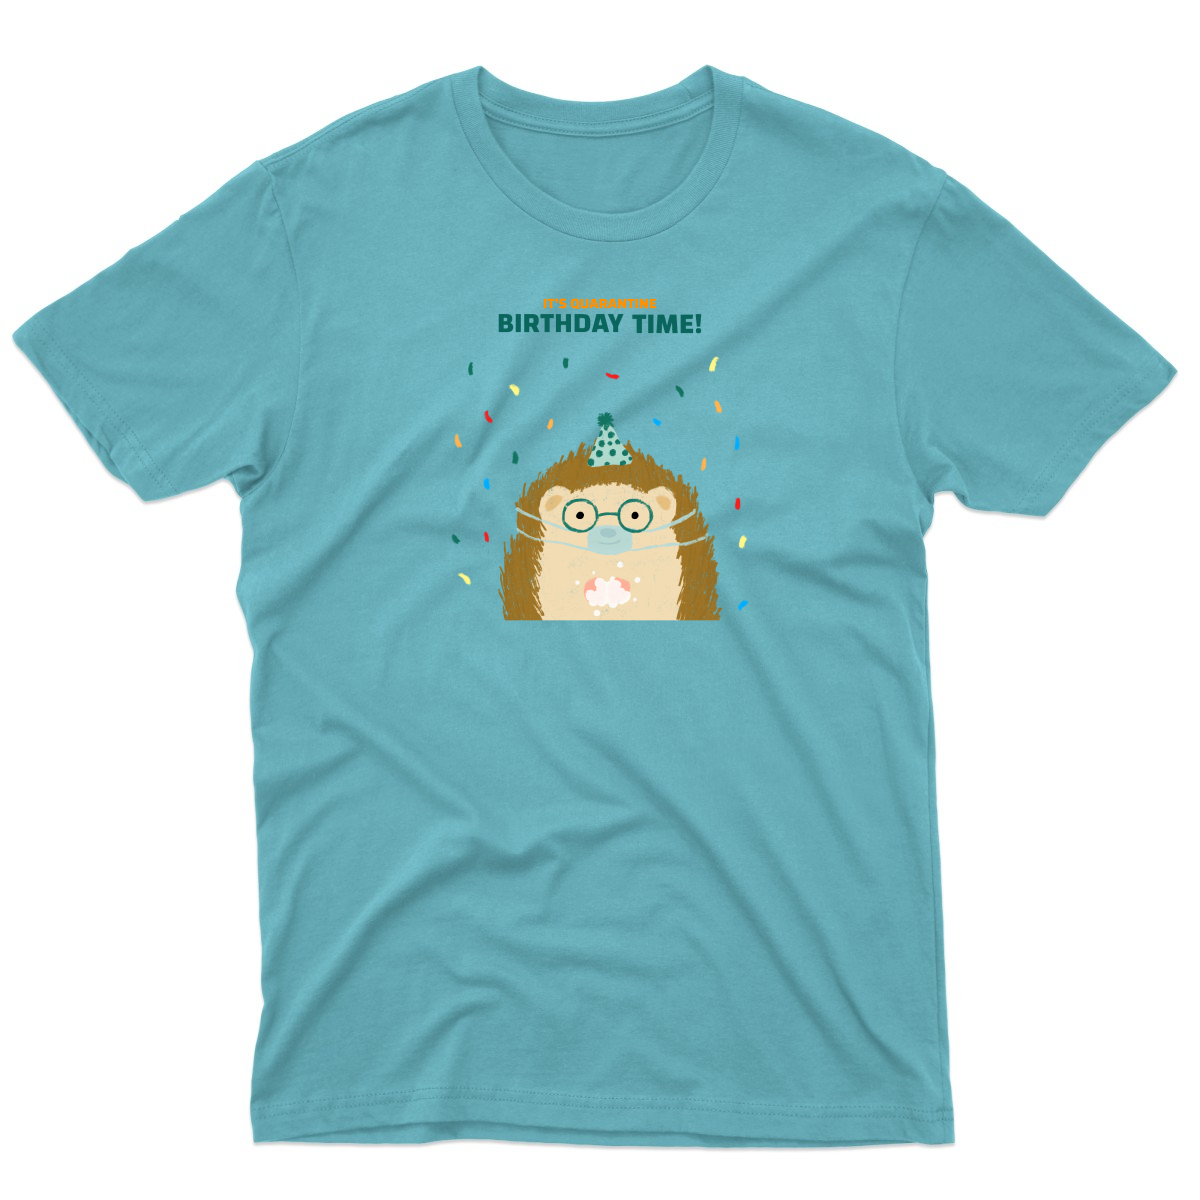 It is quarantine birthday time Men's T-shirt | Turquoise